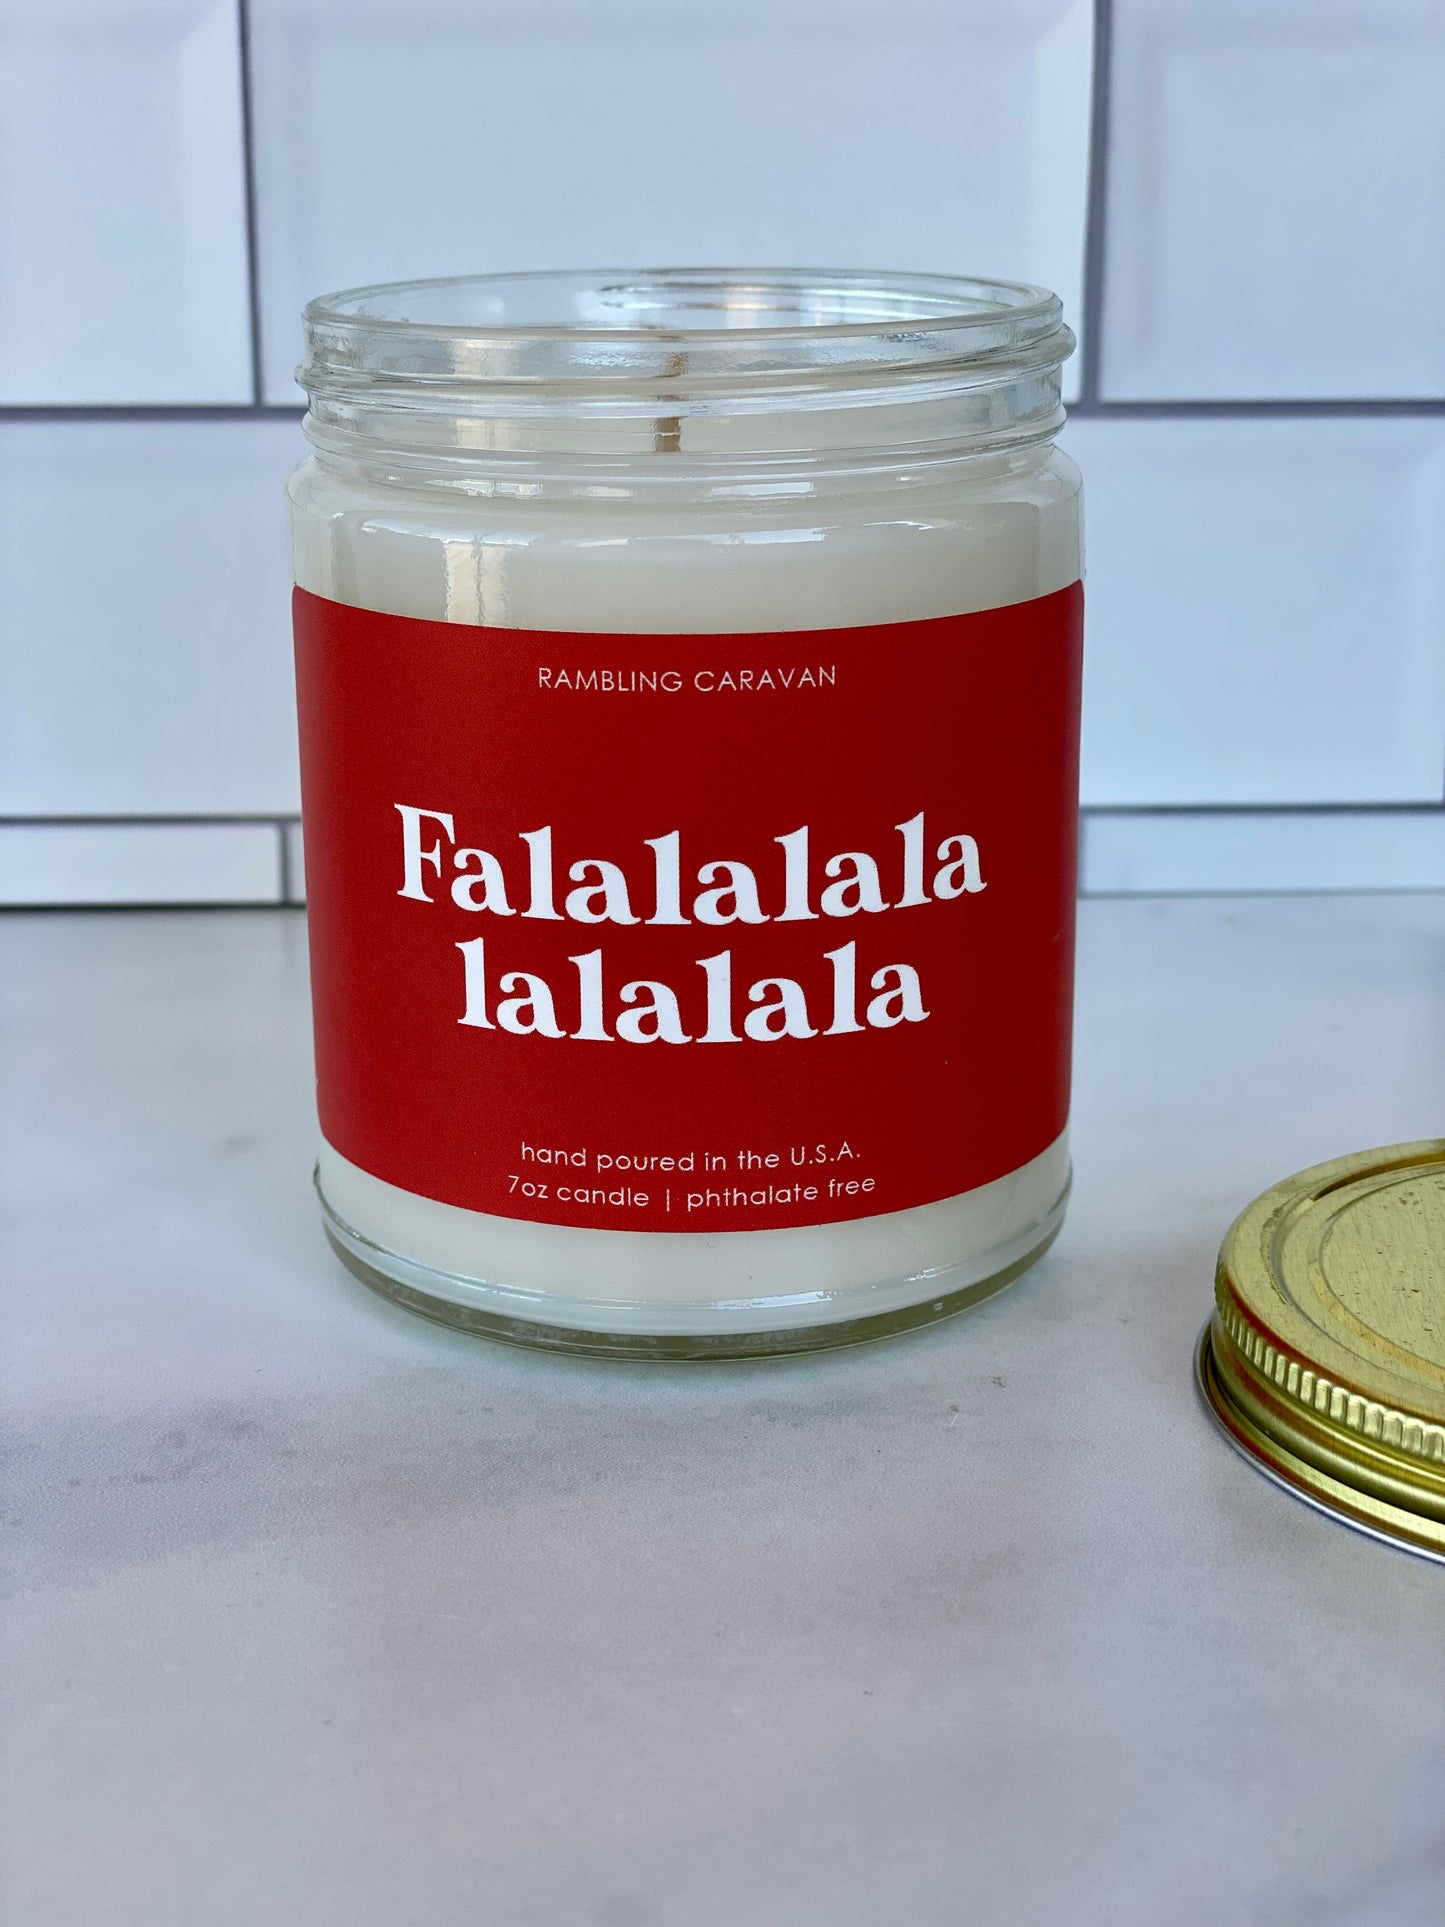 Falalalala-lalalala Candle